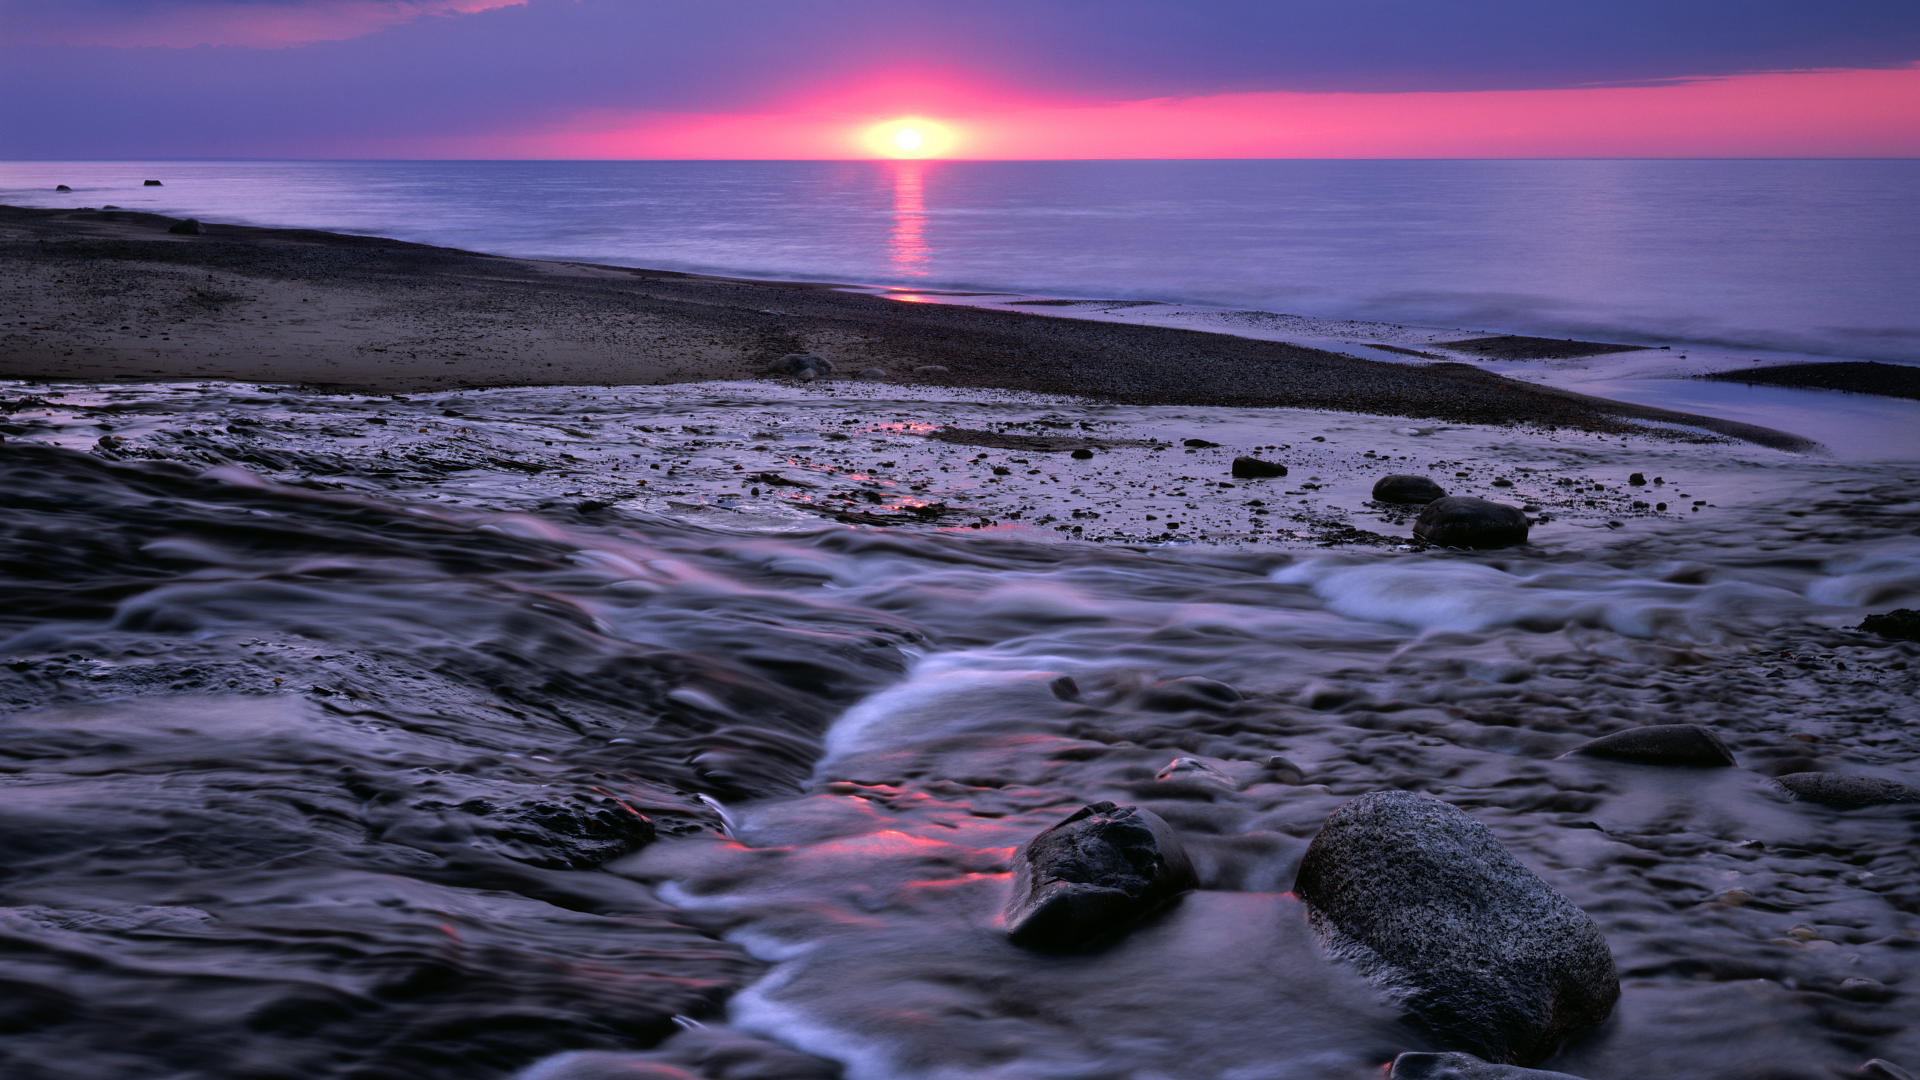 Background Sunset Light Lake Superior Pictured Rocks